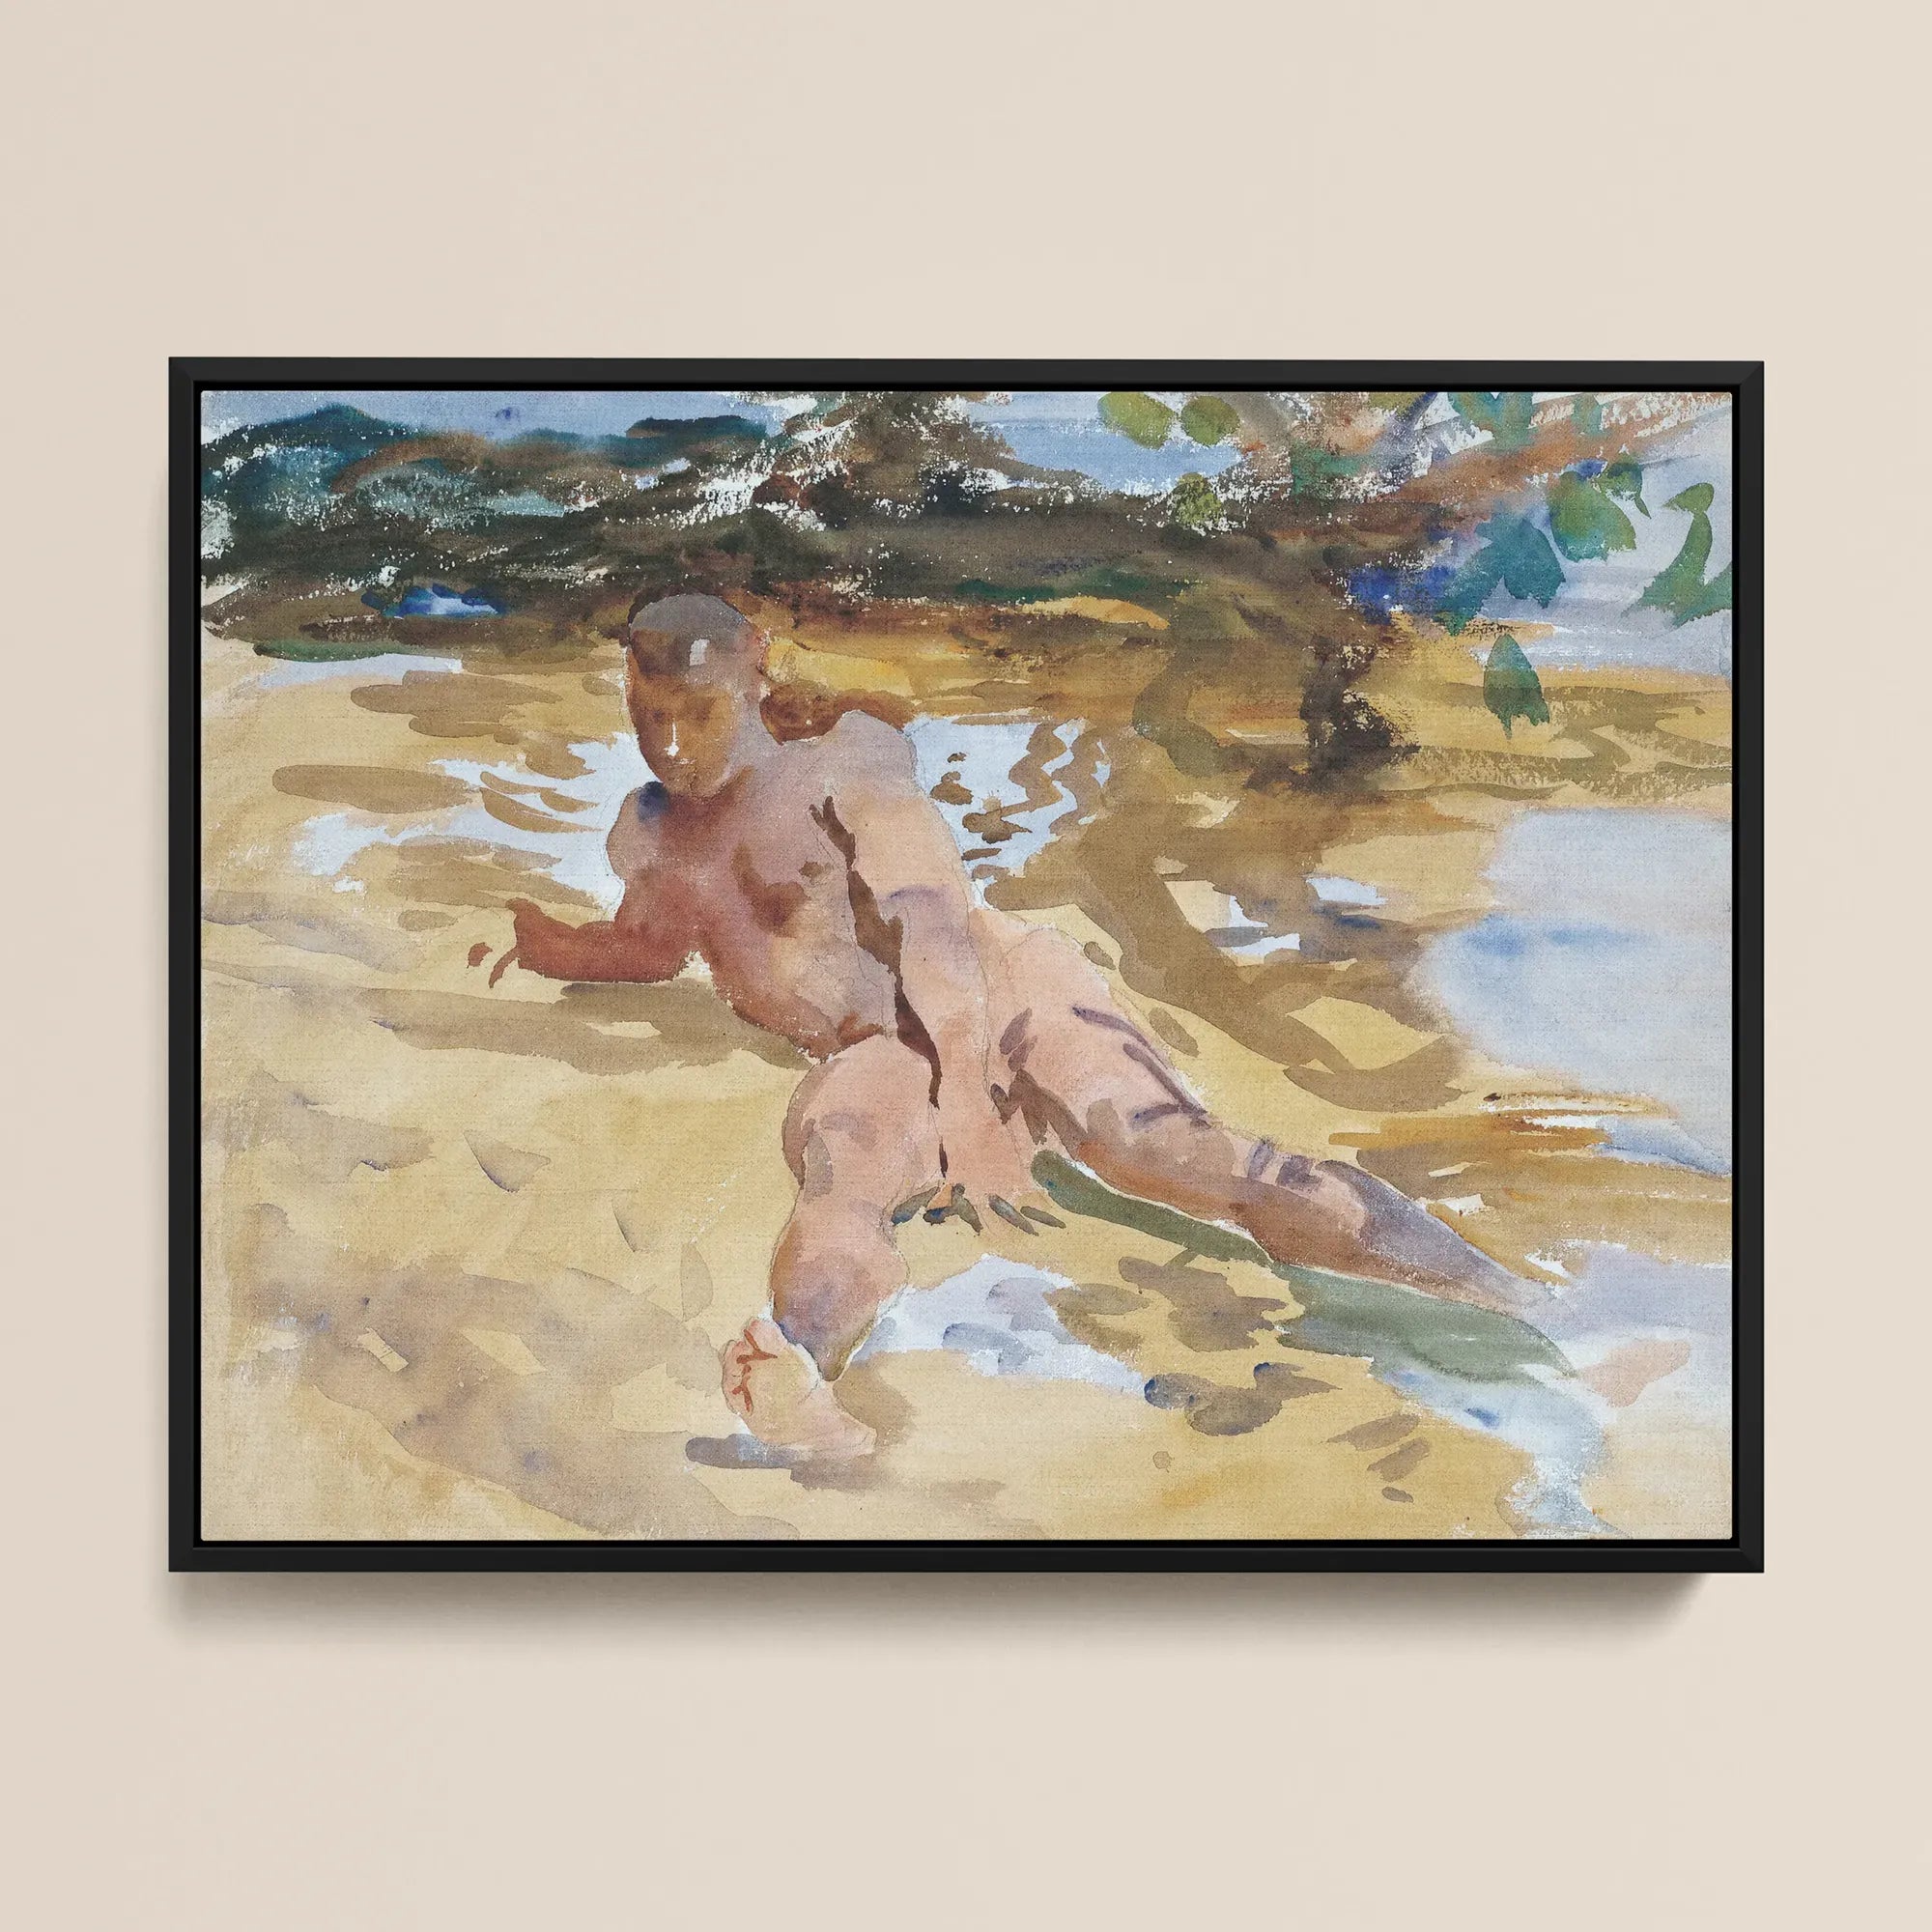 Man On Beach - John Singer Sargent Gay Nude Framed Canvas - Posters Prints & Visual Artwork - Aesthetic Art